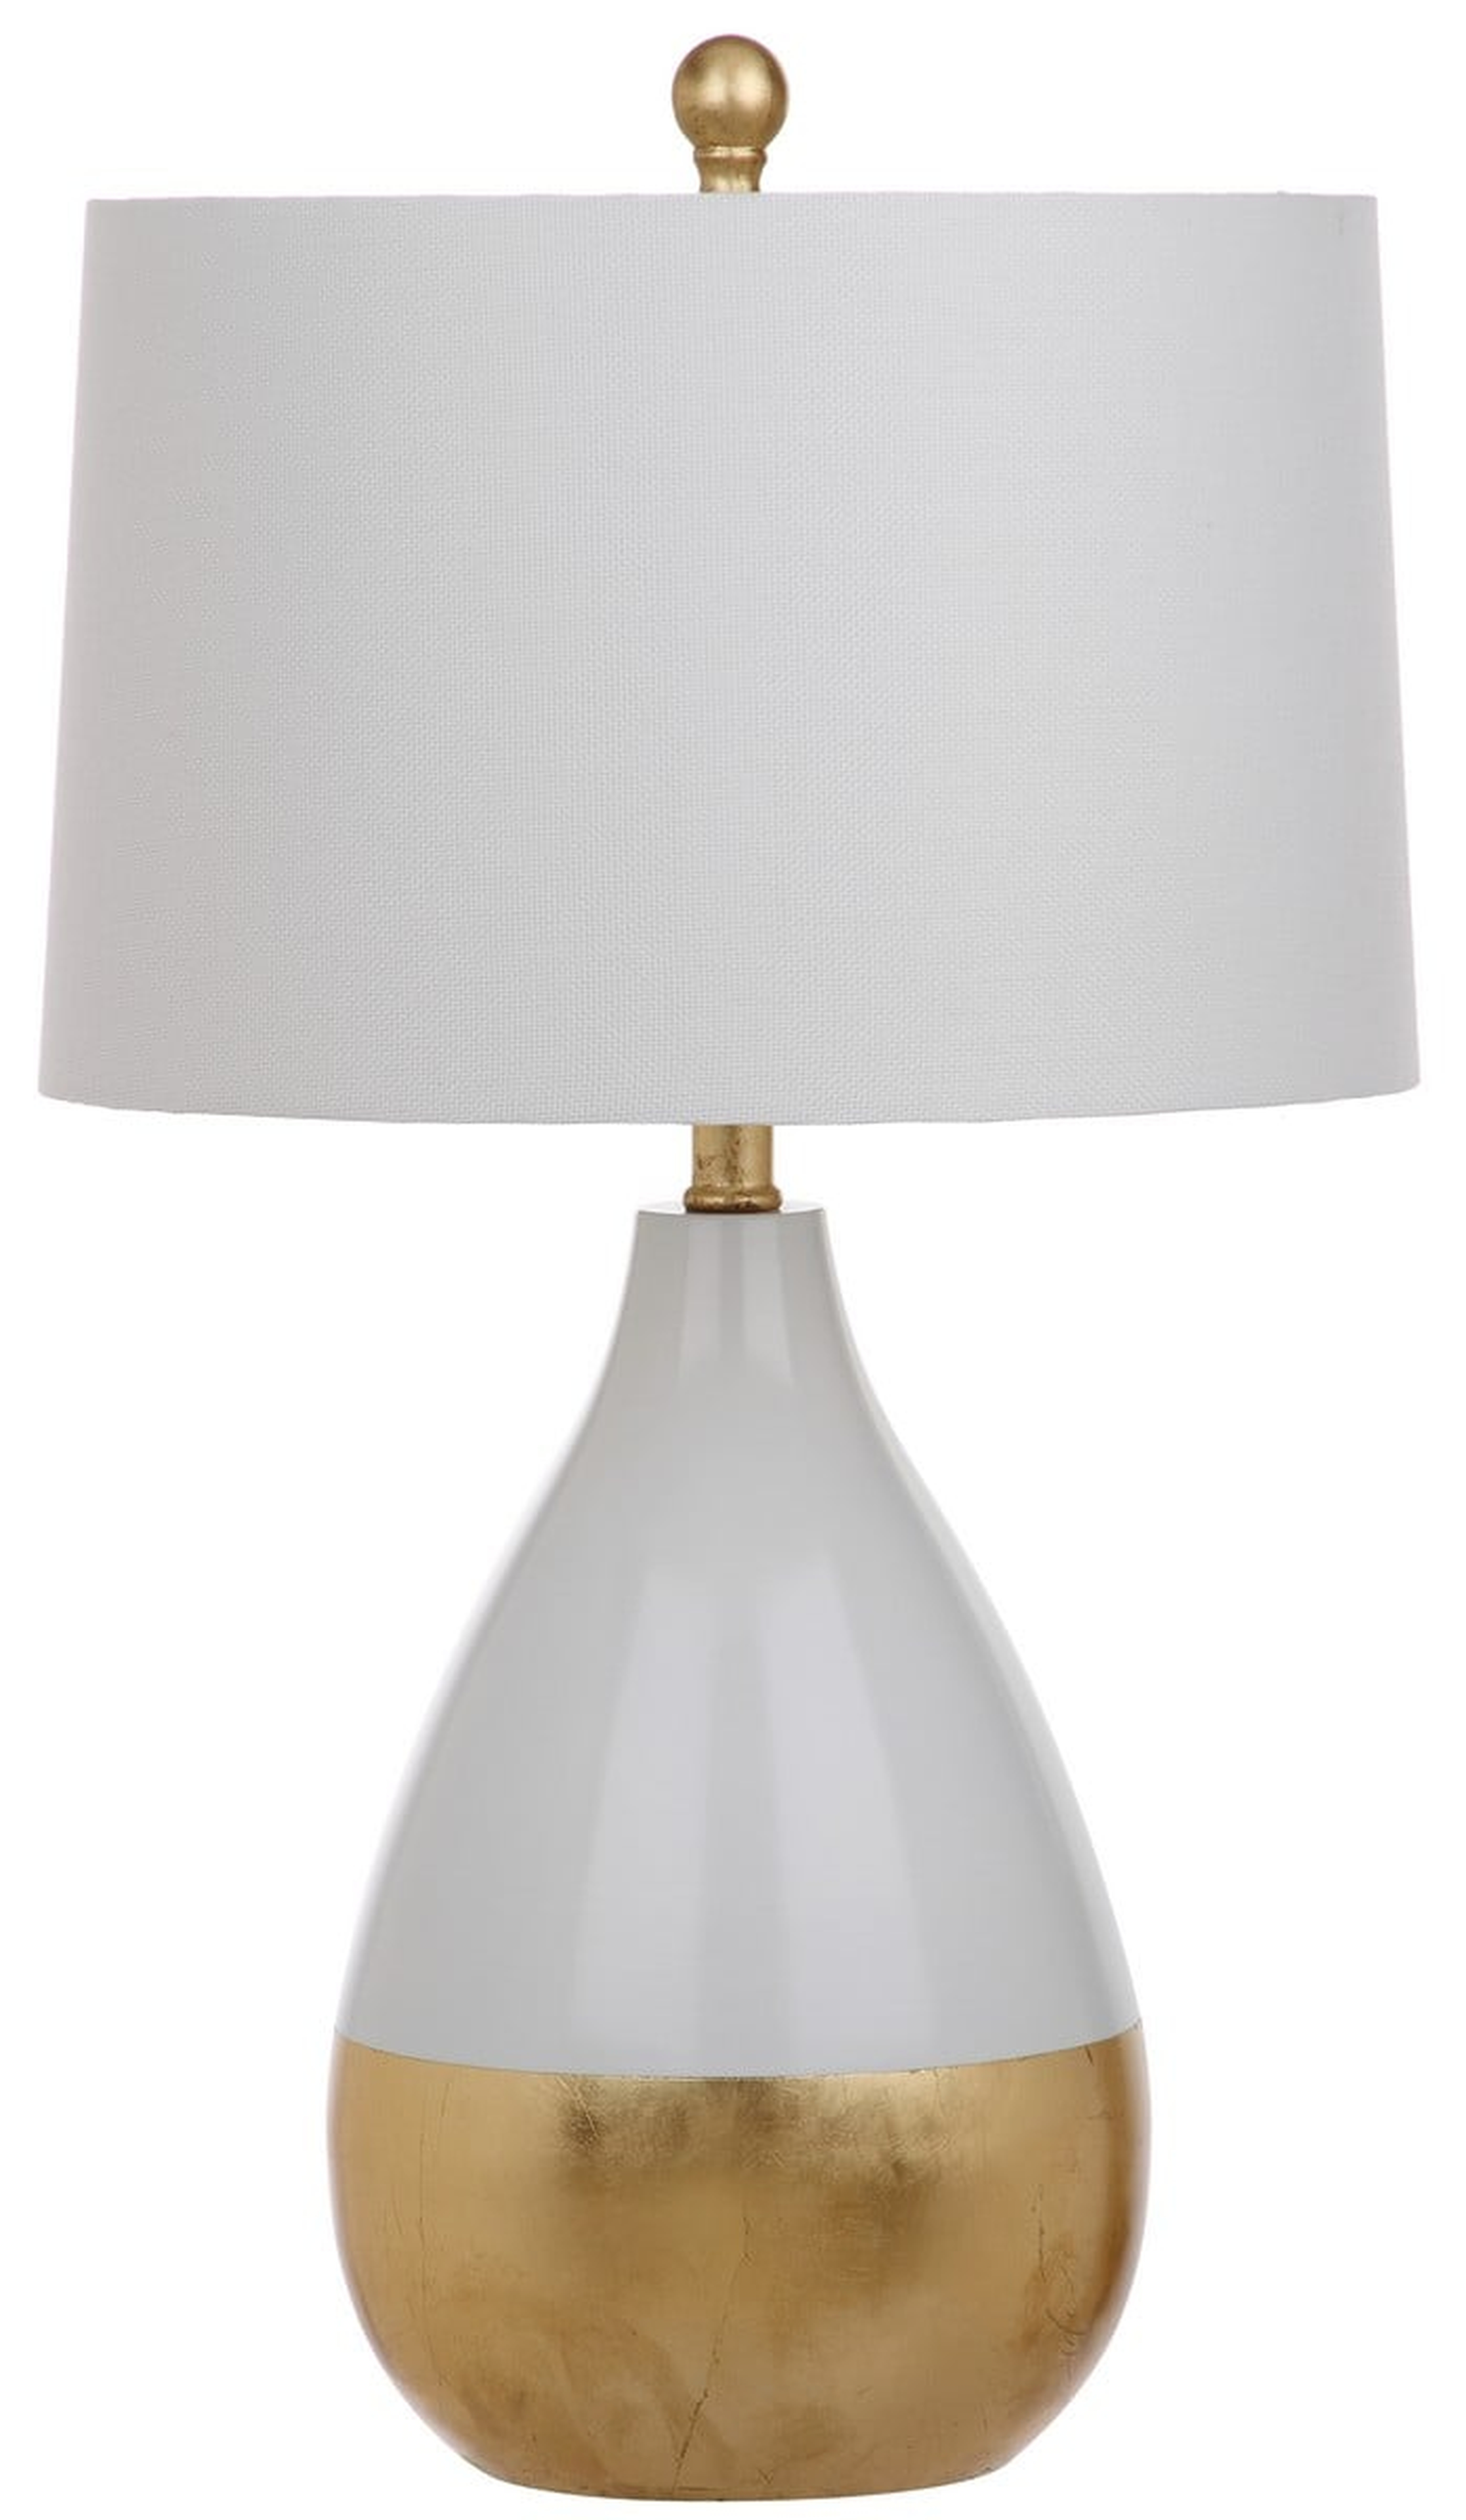 Kingship Table Lamp, Gold & White, Set of 2 - Arlo Home